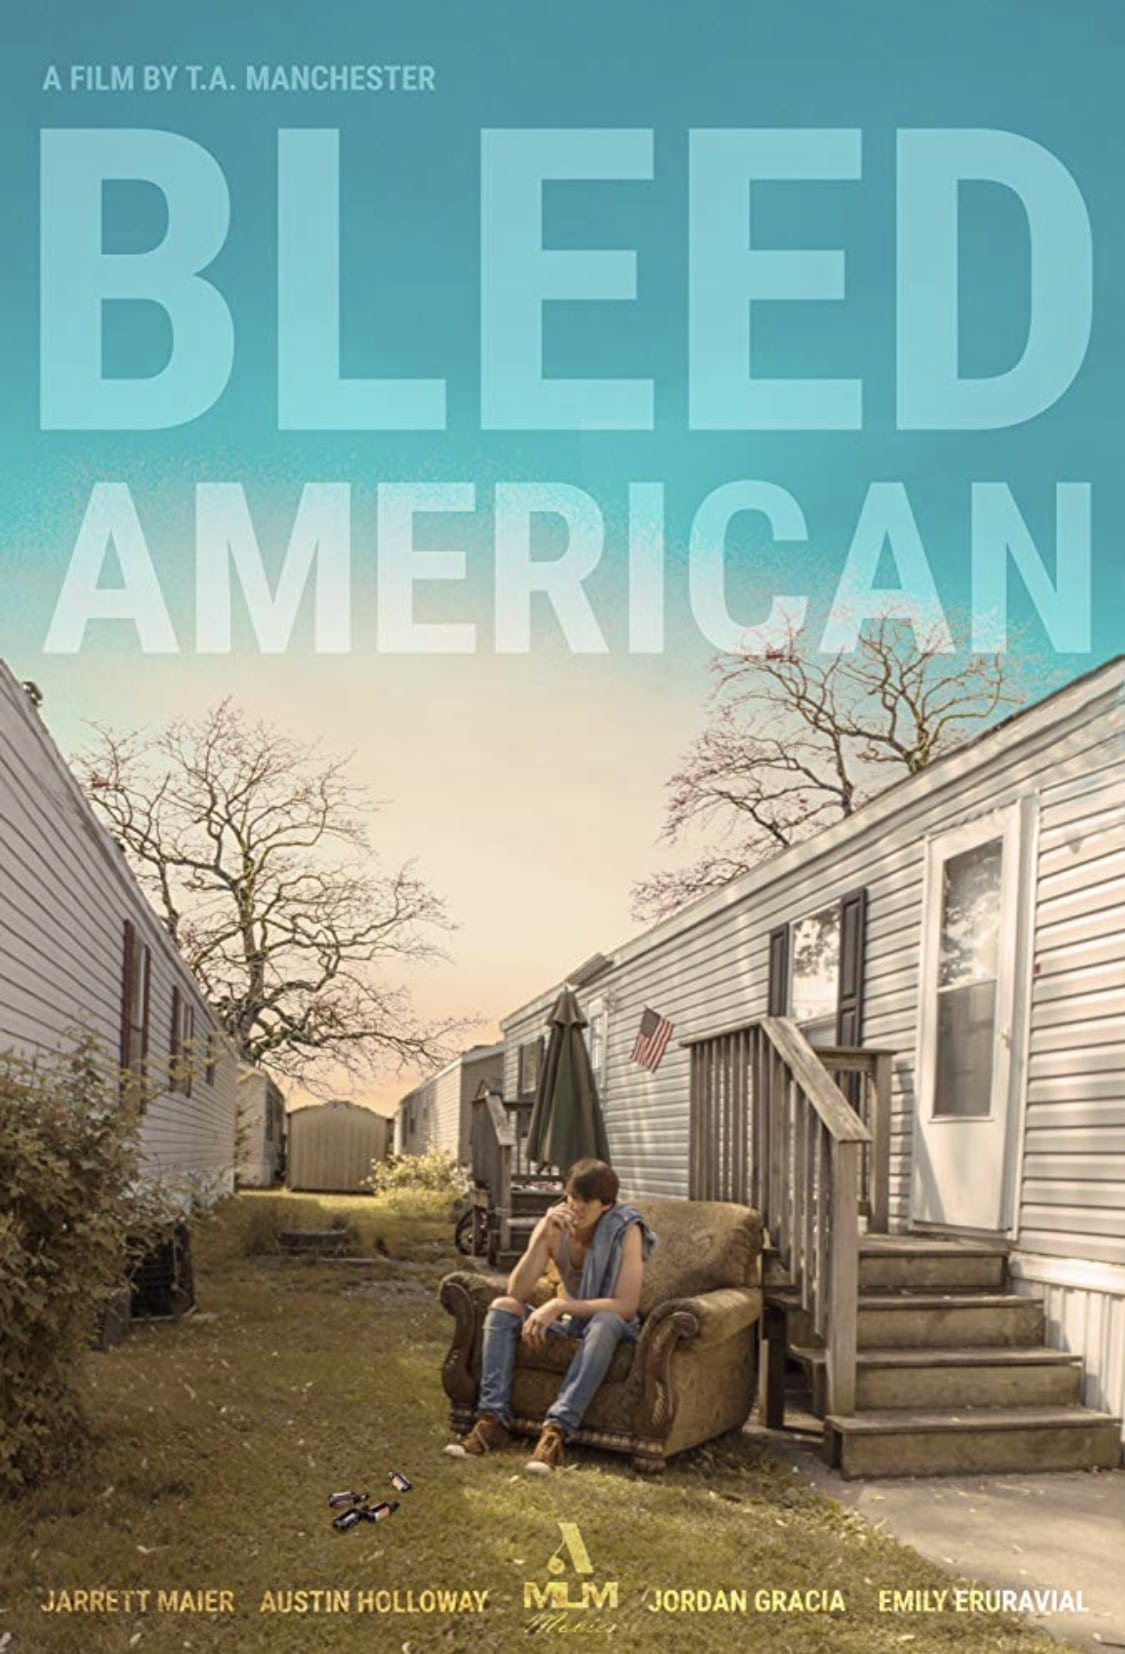 Bleed American (2019)